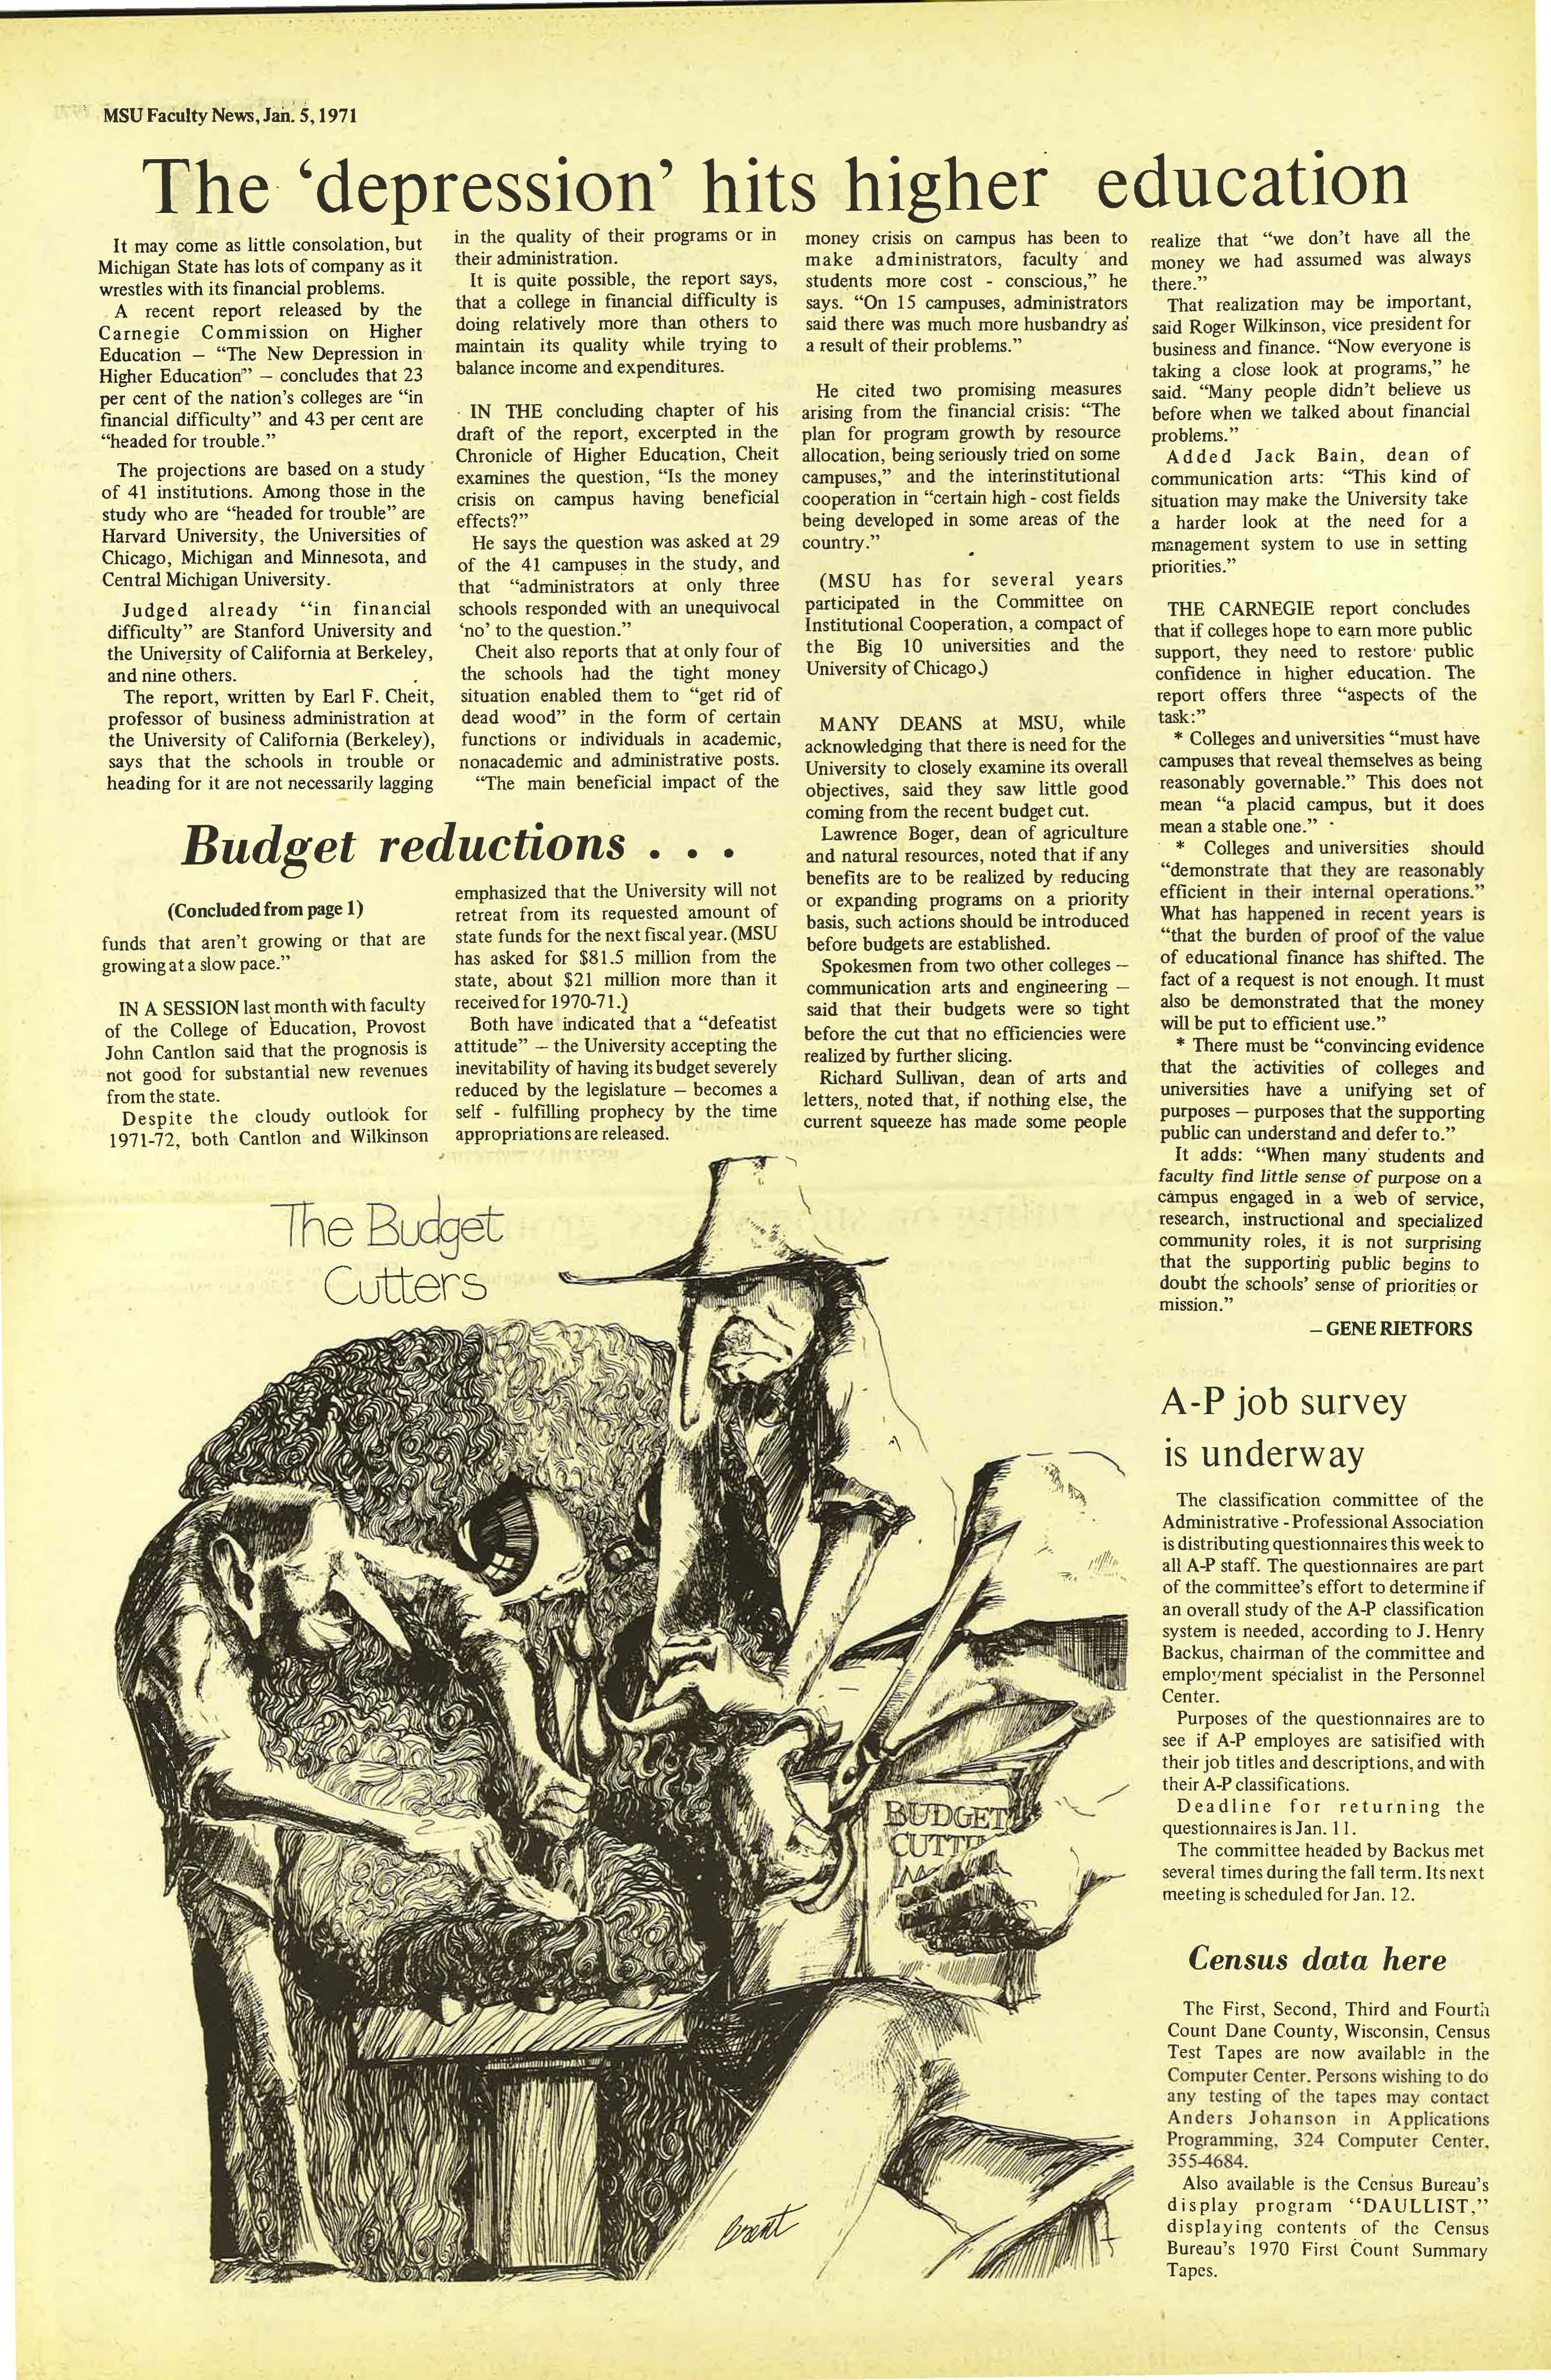 MSU News Bulletin, vol. 2, No. 16, February 9, 1971